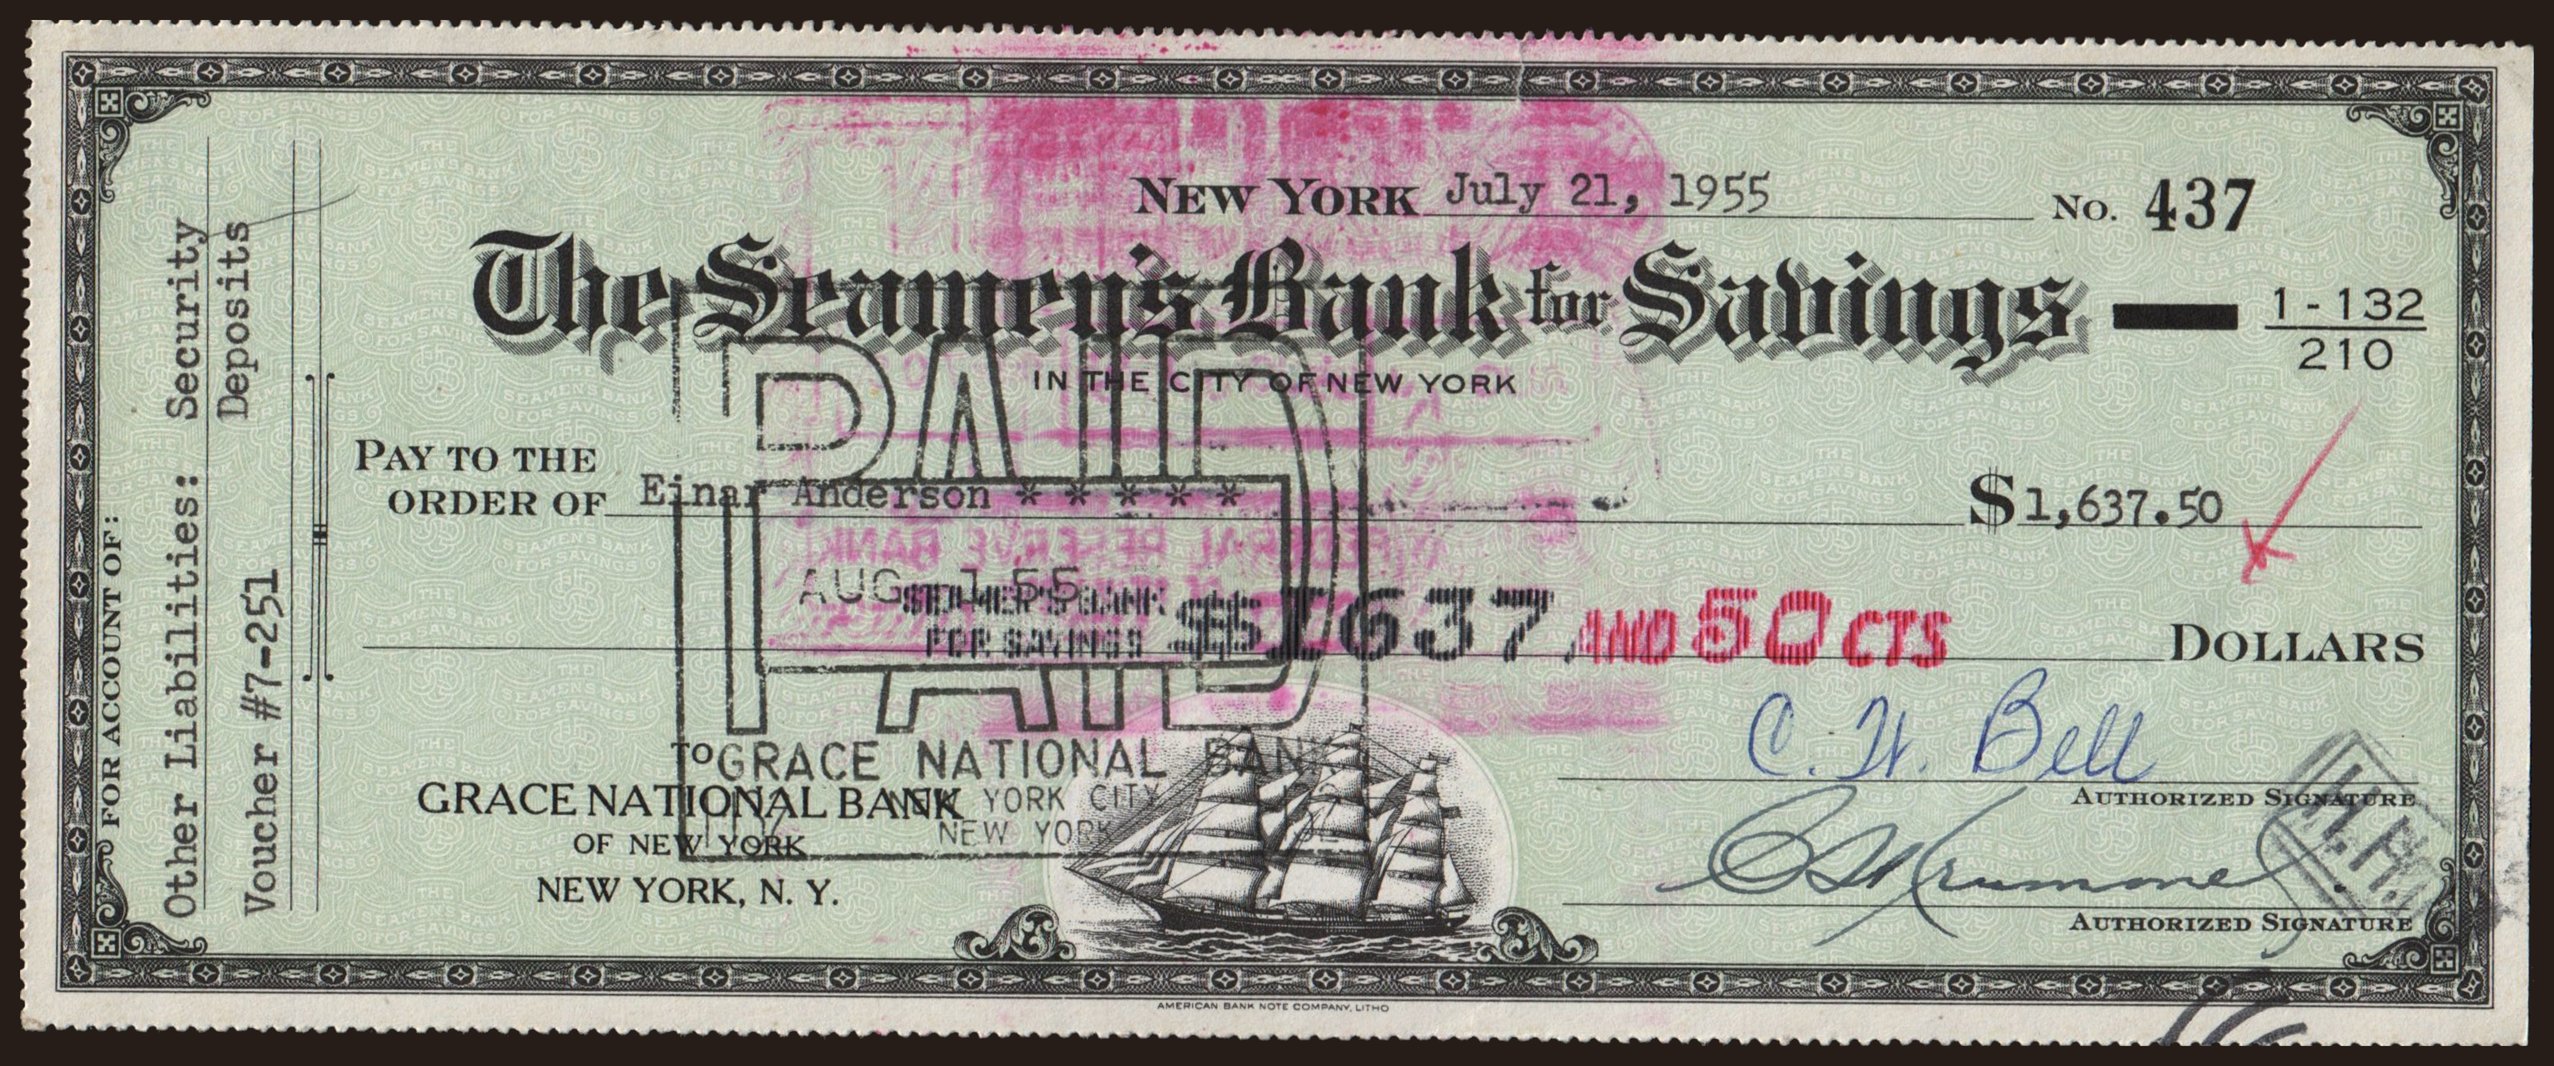 New York, The Seamen s Bank for Savings, 1637.50 dollars, 1955